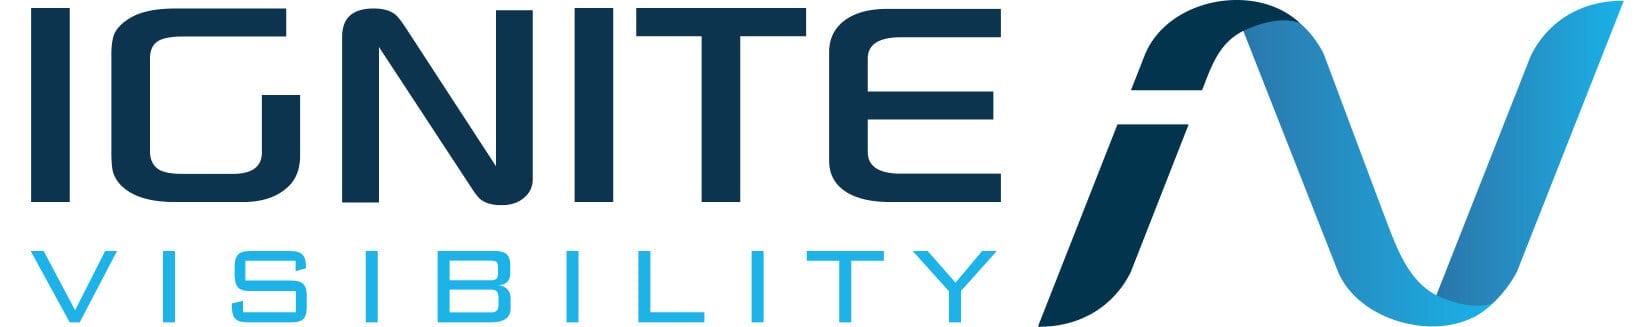 Top Dental SEO Firm Logo: Ignite Visibility